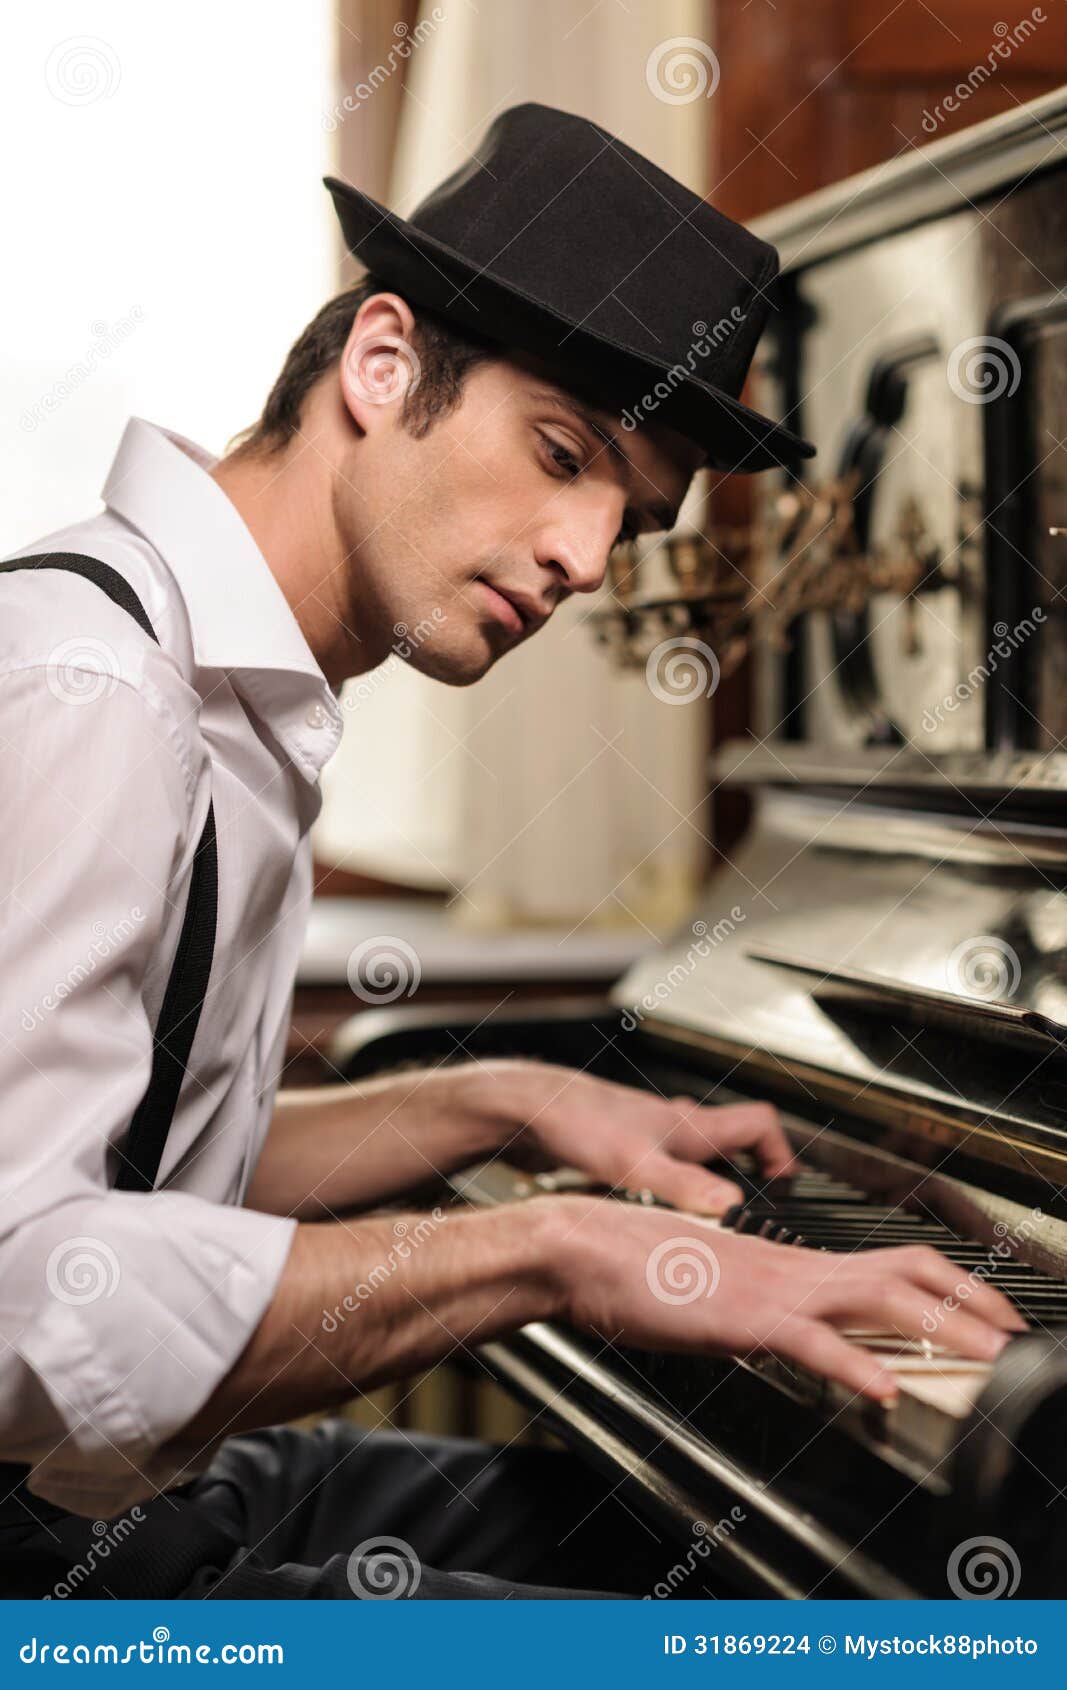 virtuoso playing piano